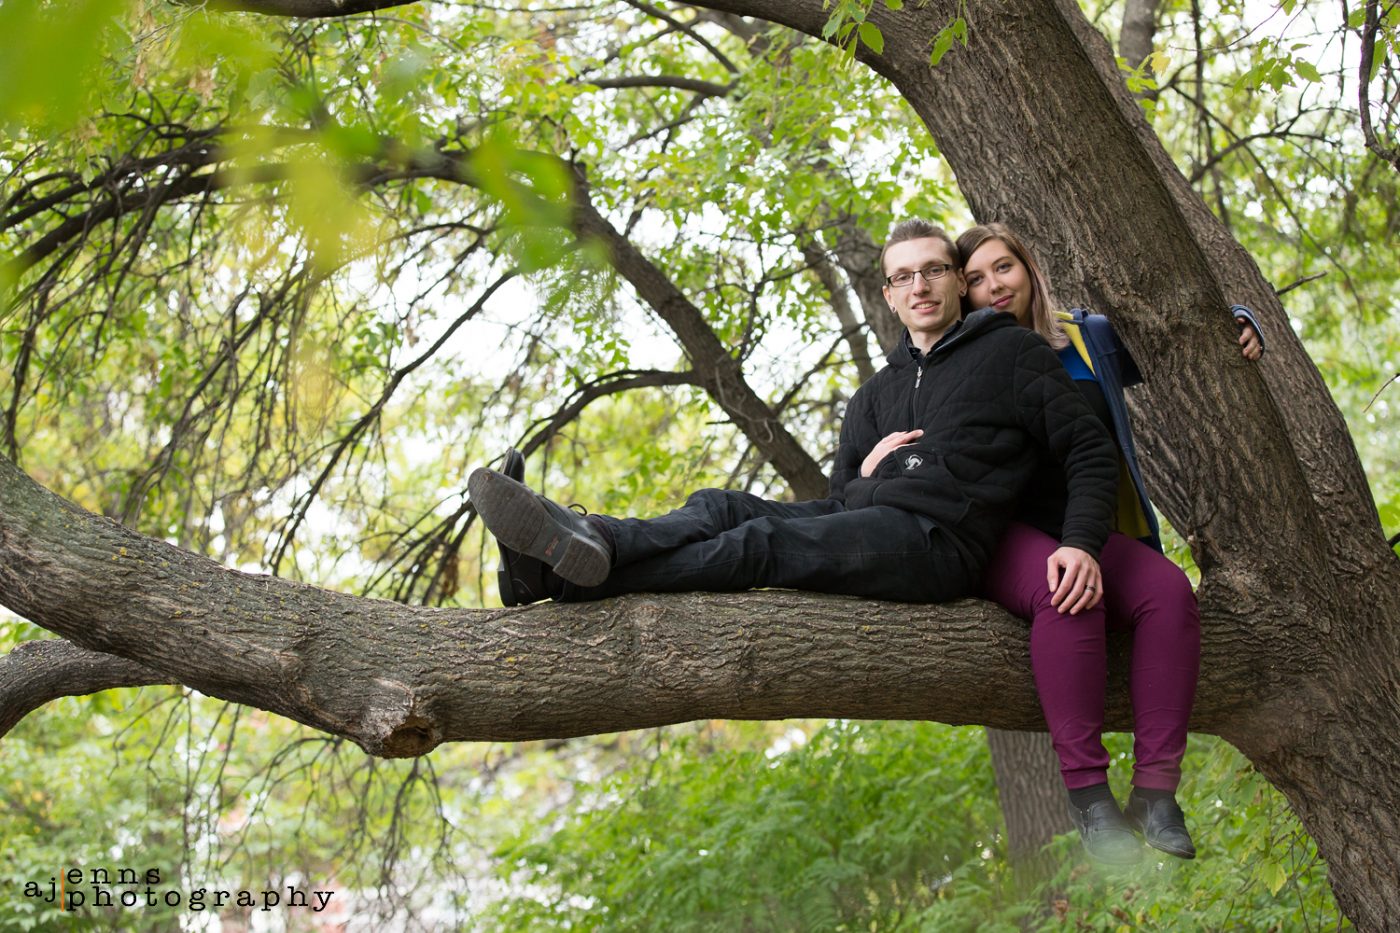 Robyn and Darryl sitting a tree branch